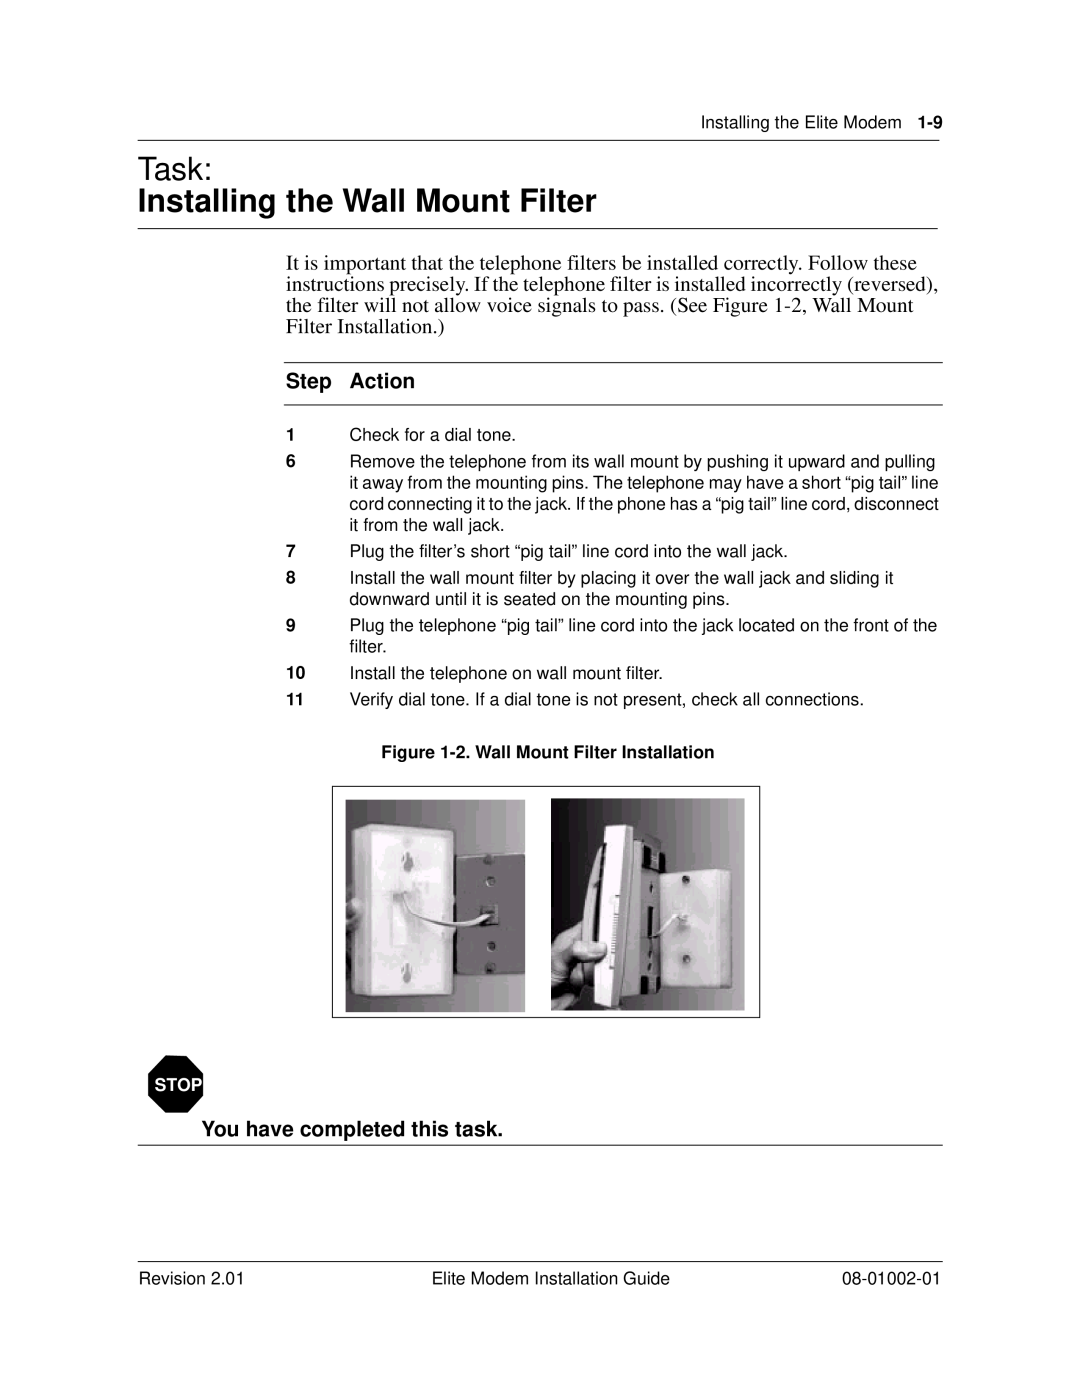 Zhone Technologies 08-01002-01 manual Installing the Wall Mount Filter, Task, 2. Wall Mount Filter Installation, Stop 